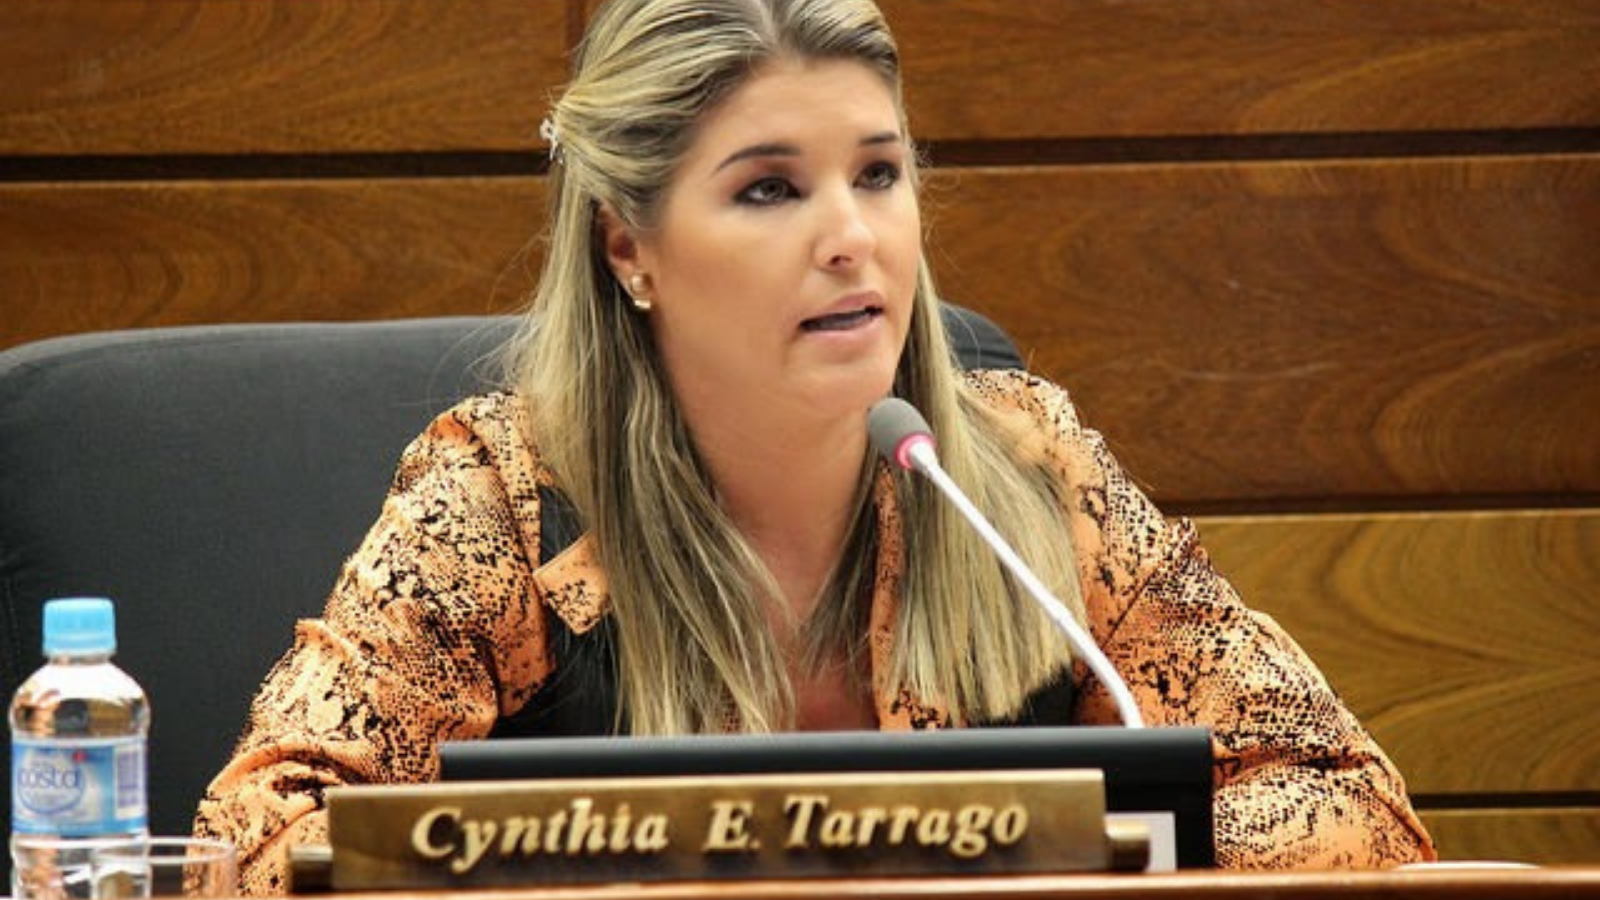 ANR promises "objective" evaluation of Tarragó's return request